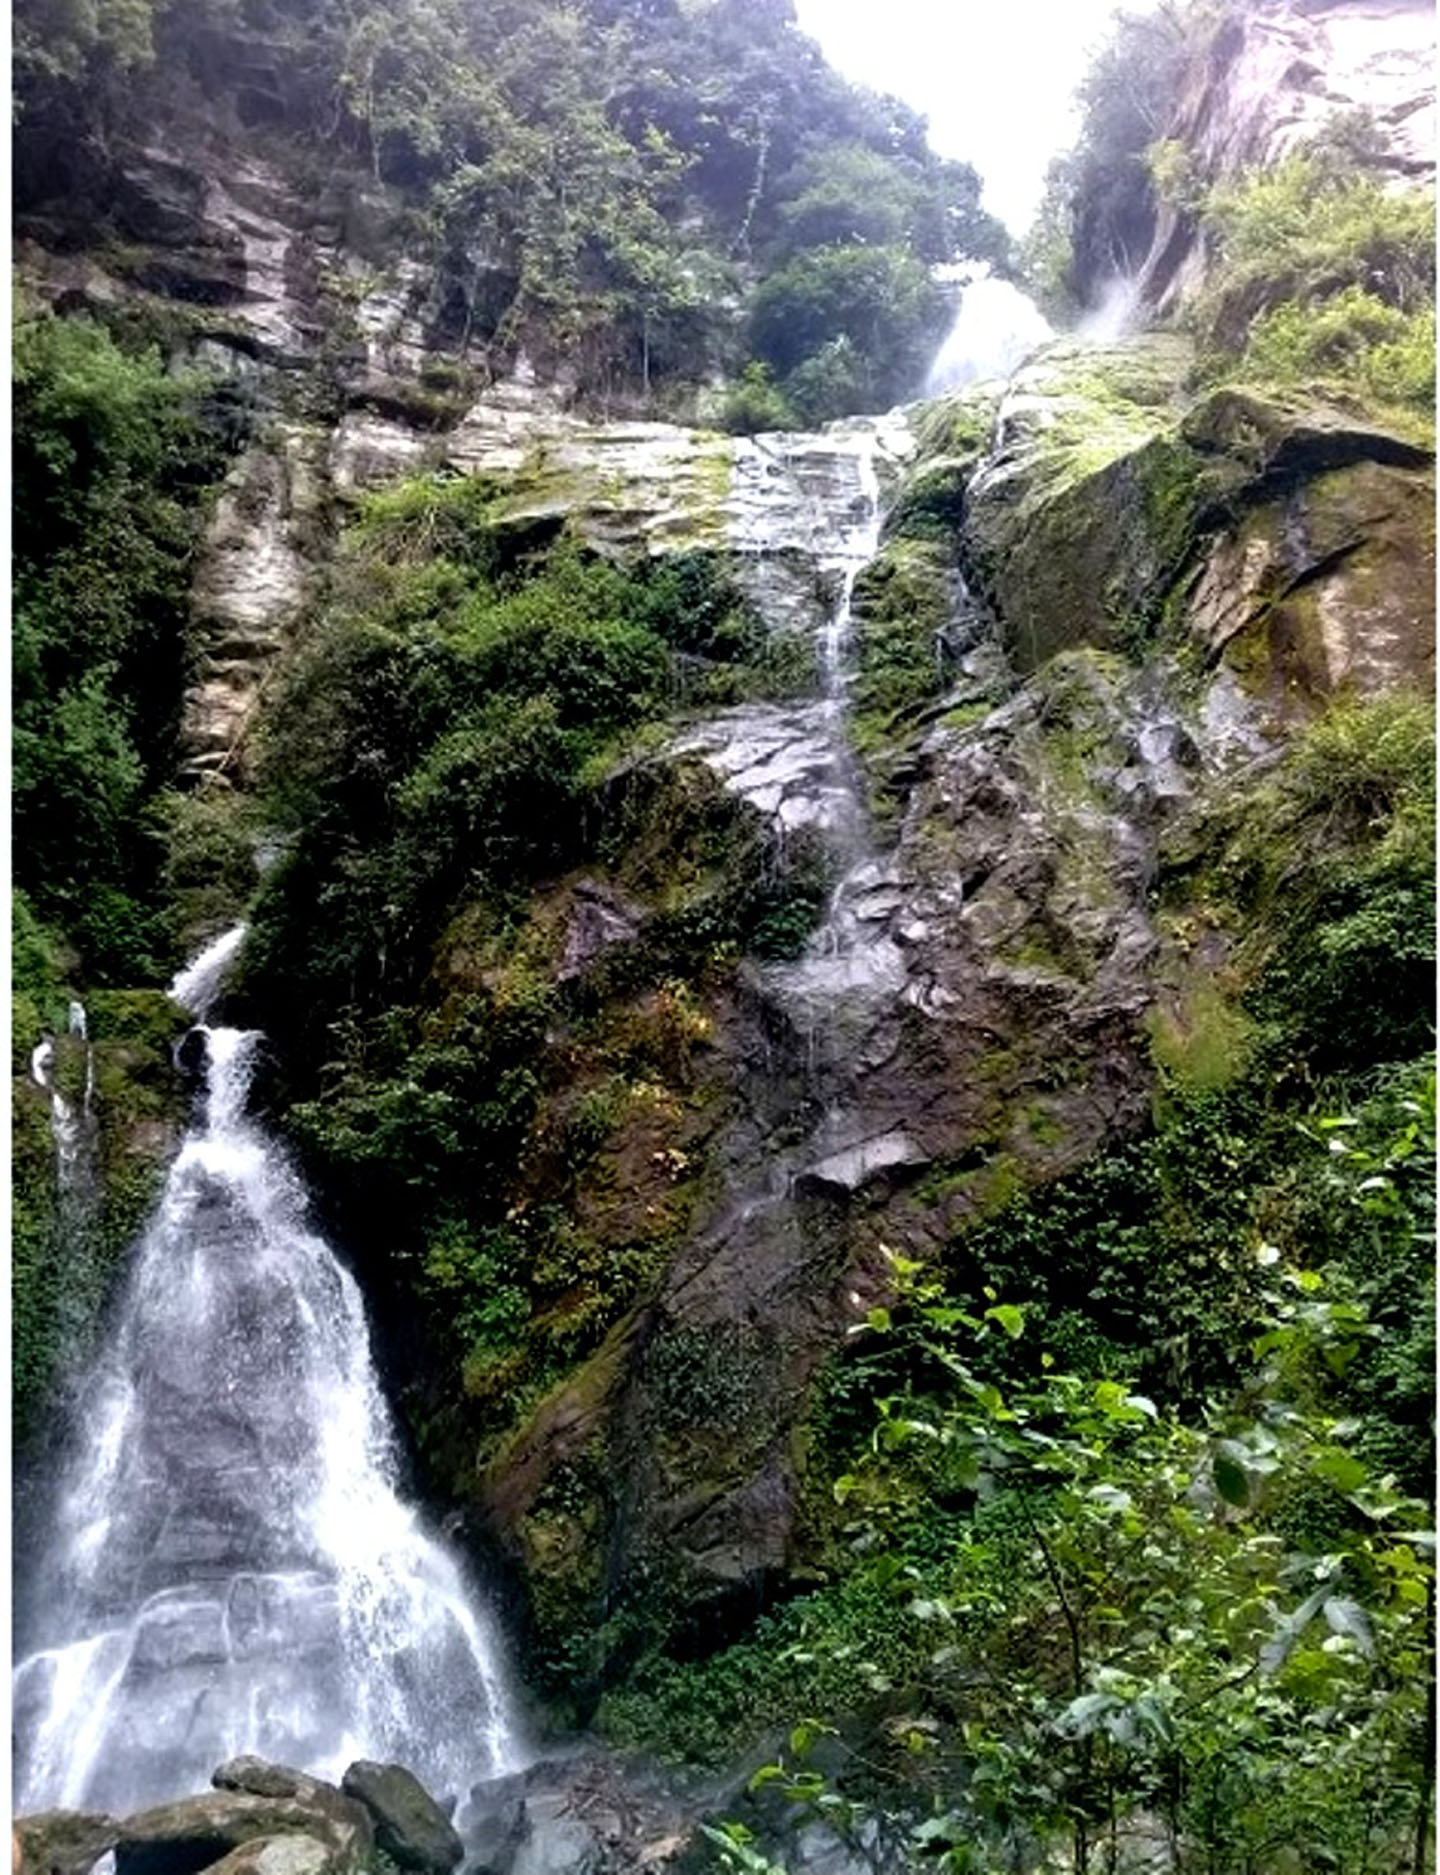 Mahabhir waterfall in Bhojpur emerging as a tourist attraction